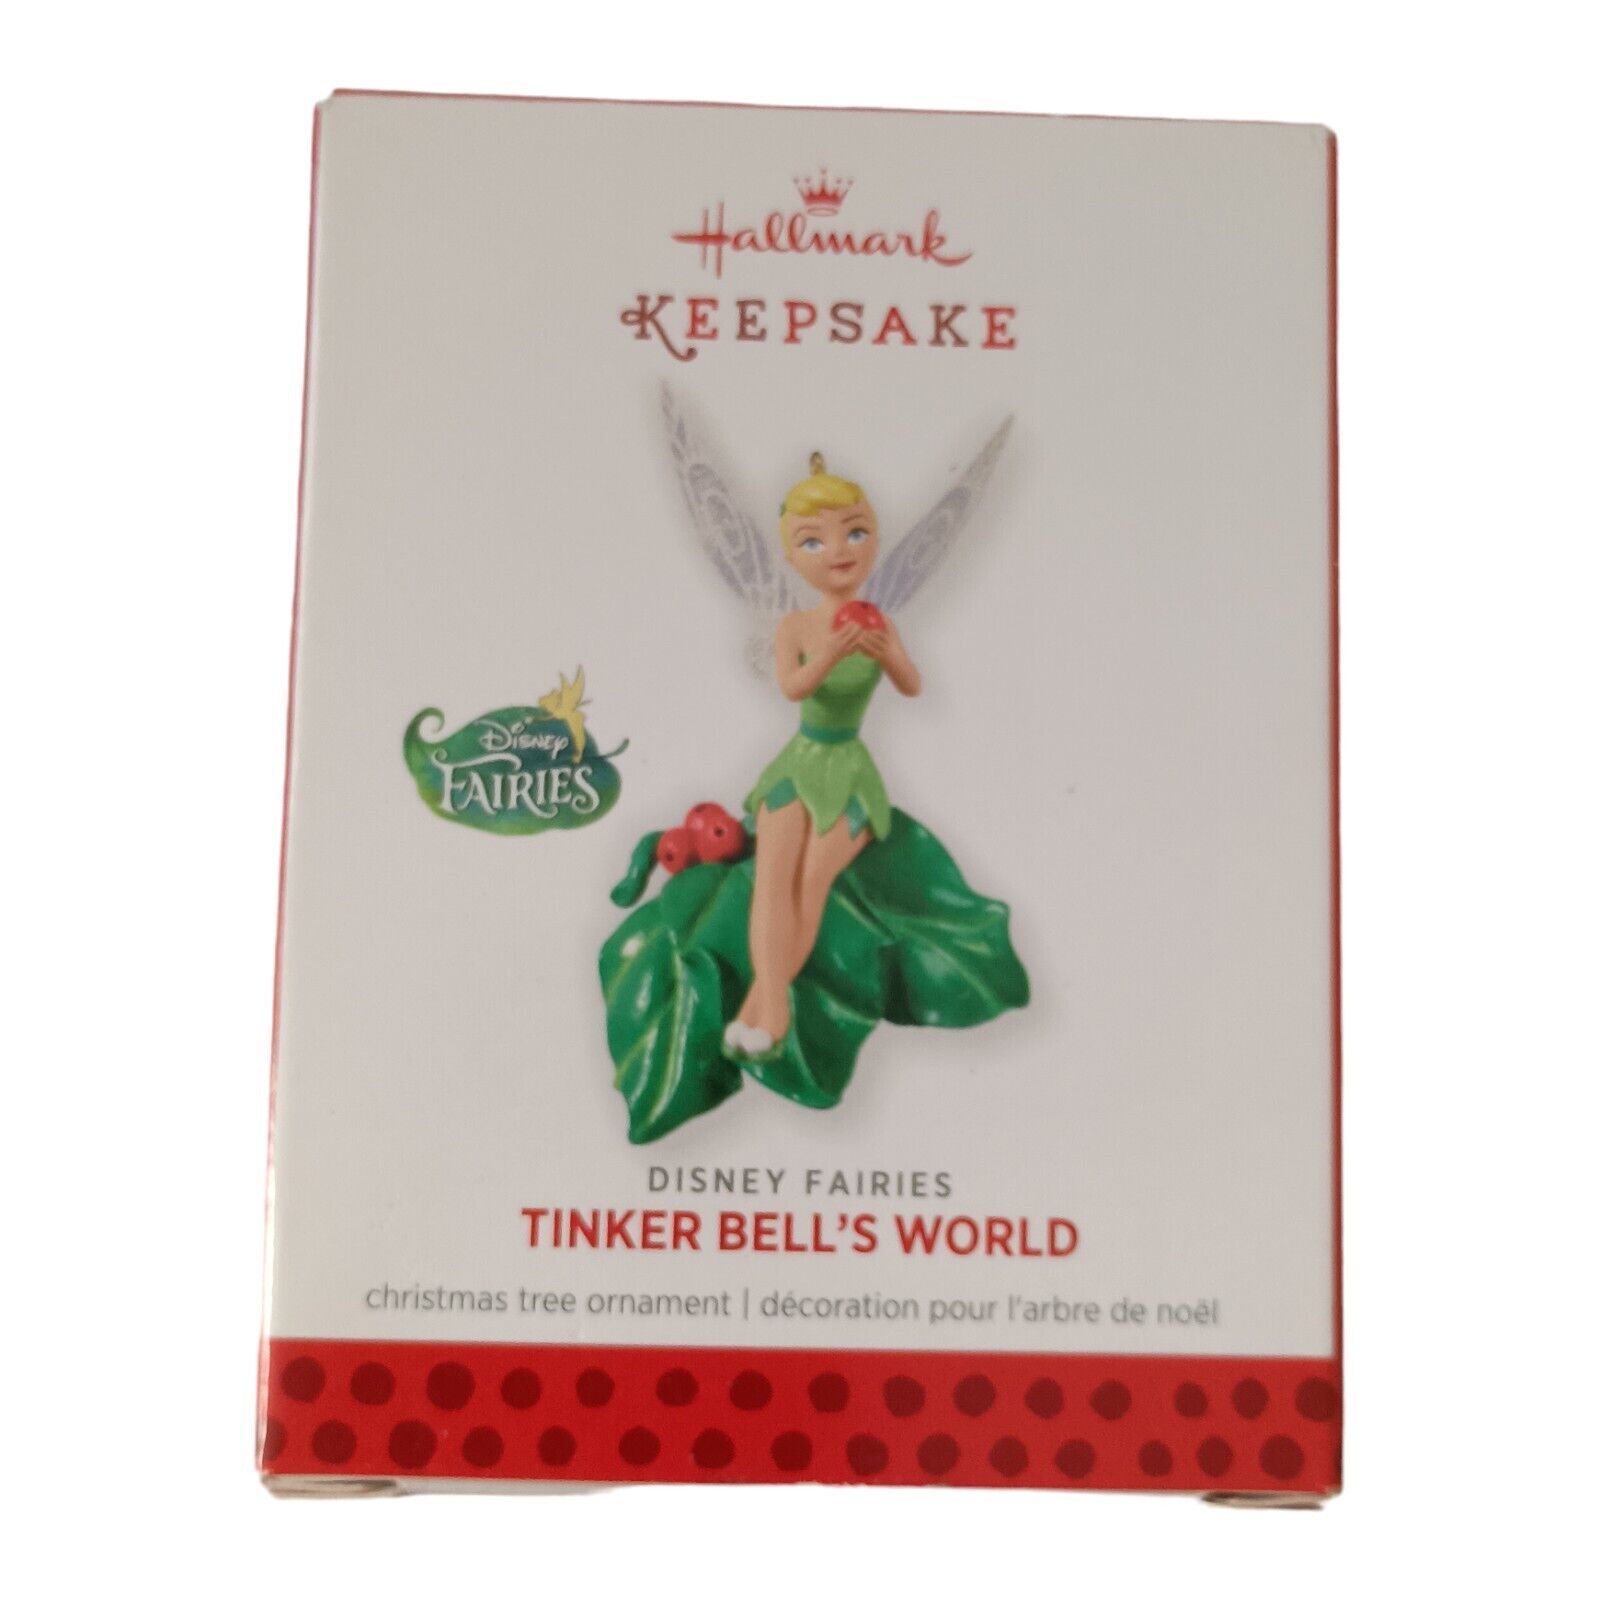 Hallmark Disney Tinker Bells World Ornament Keepsake Fairies 2013 With Box 